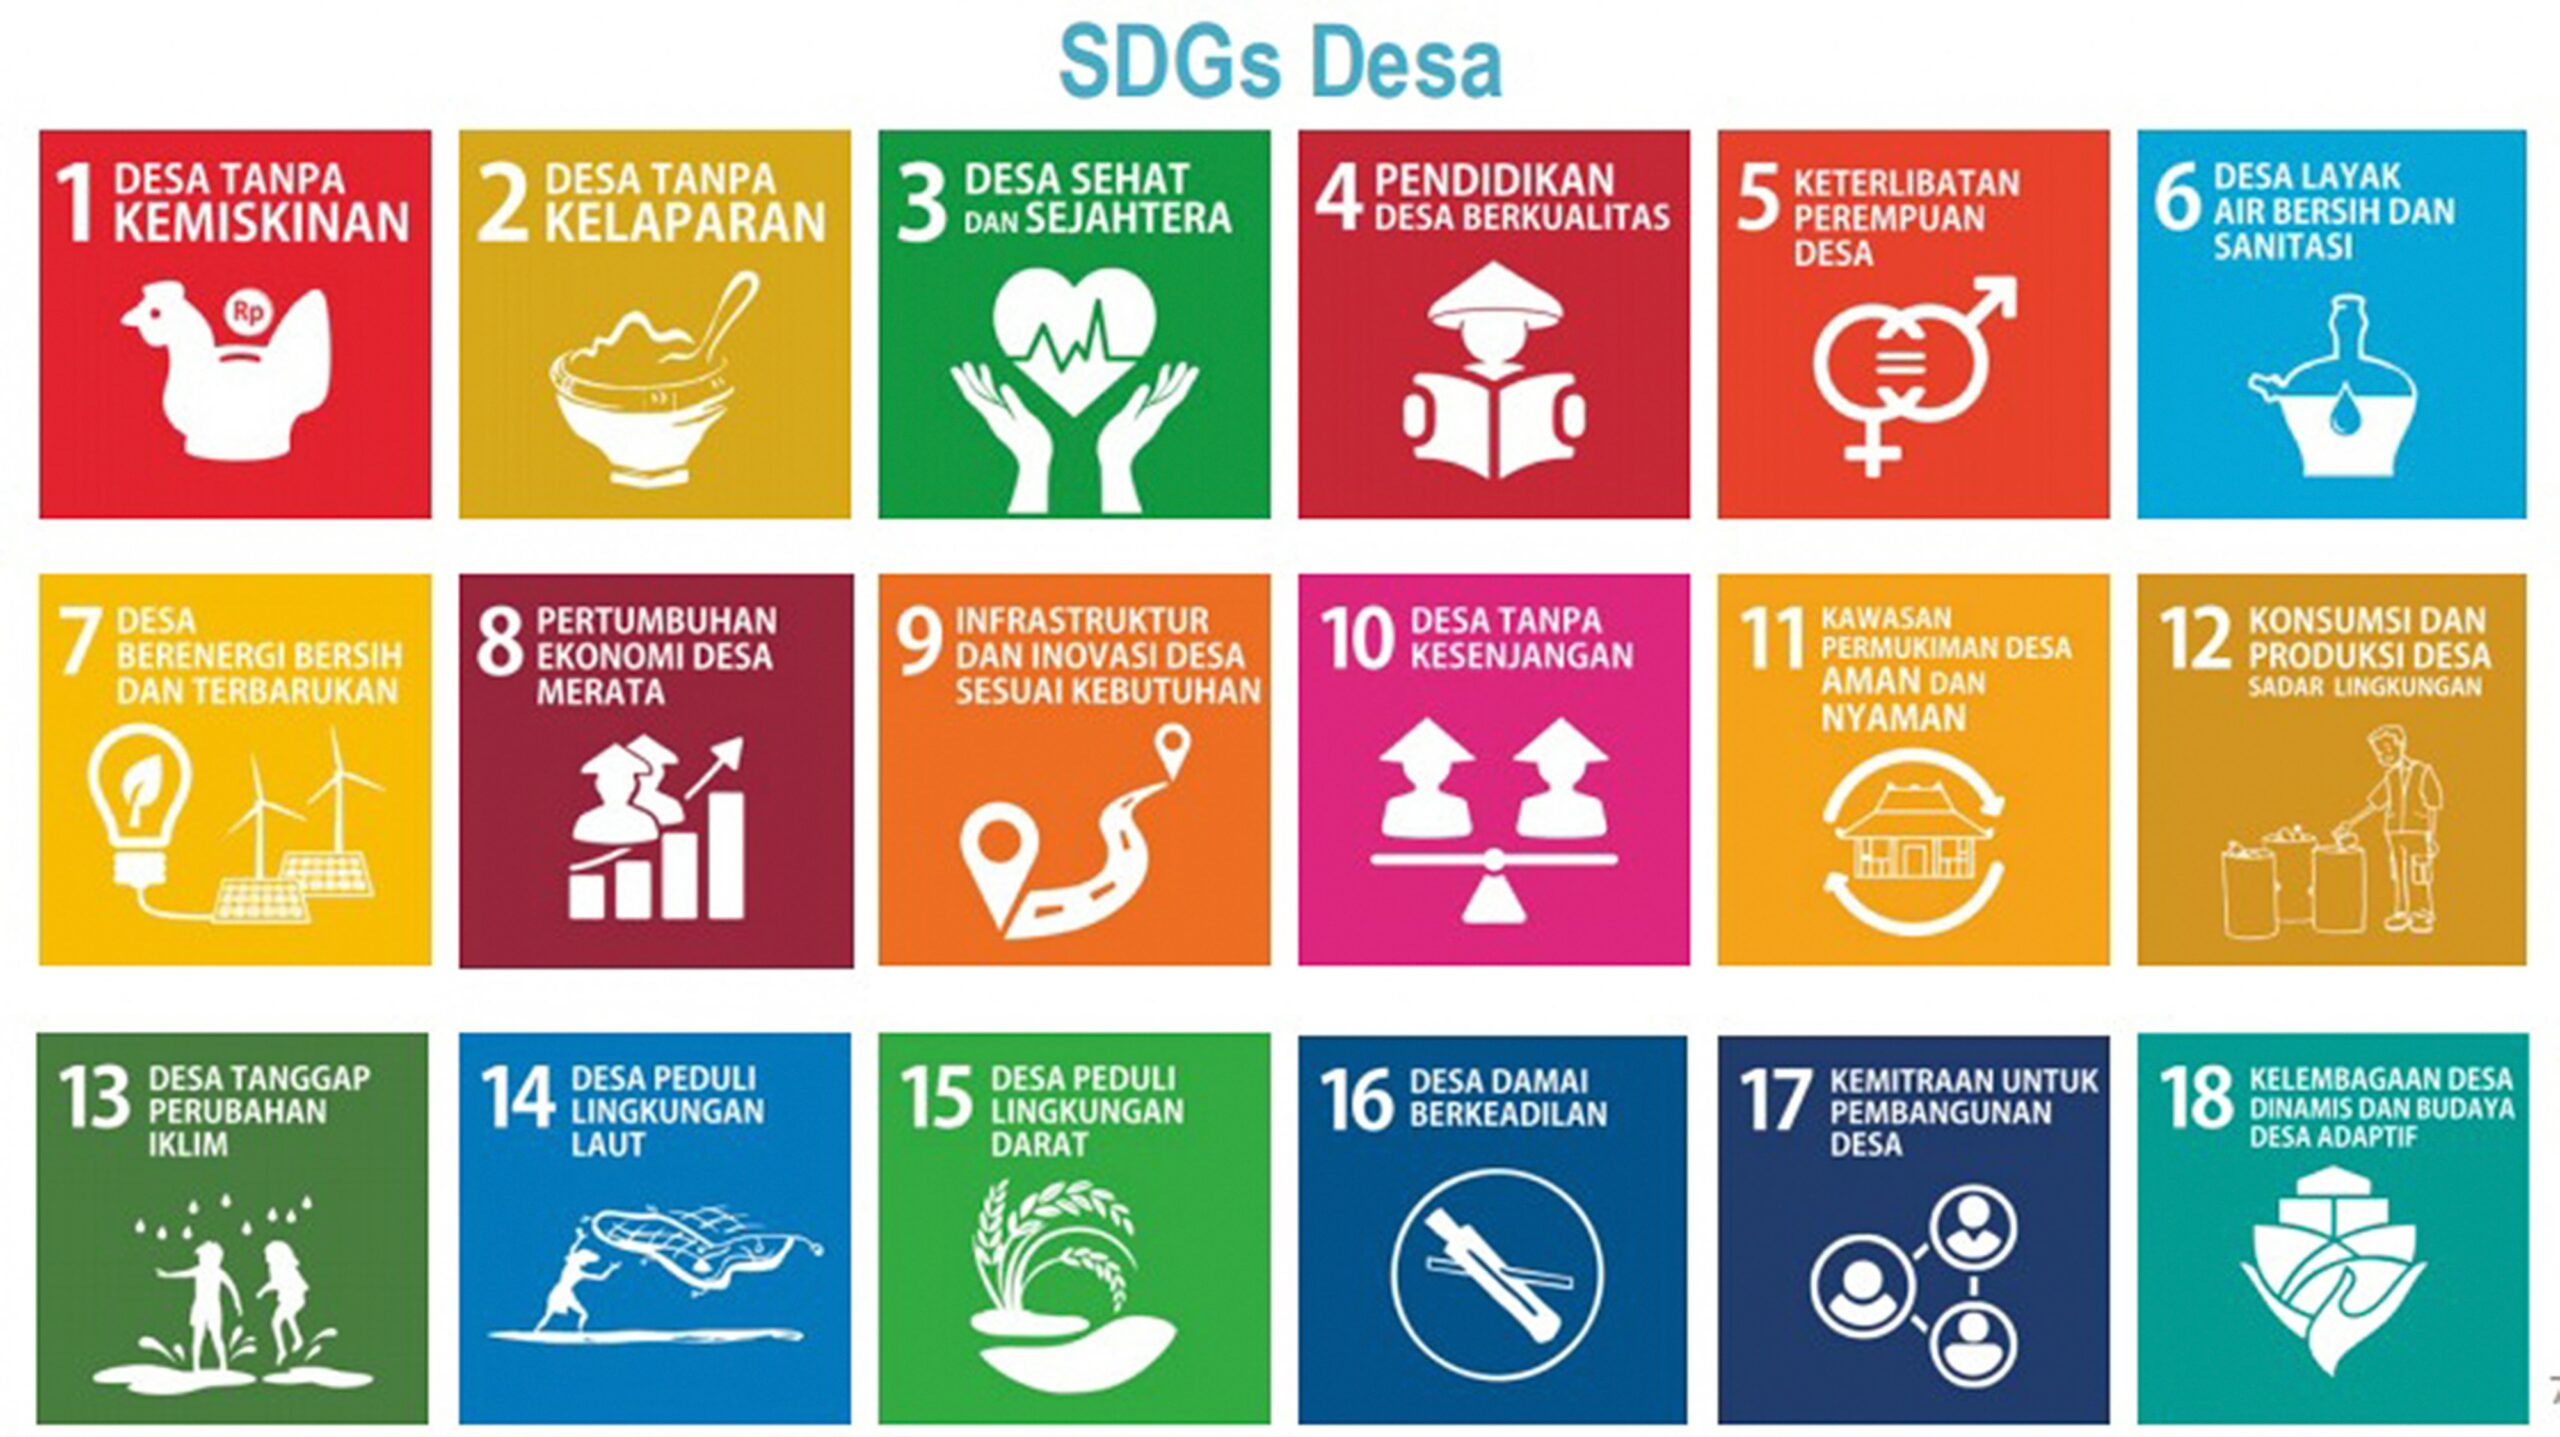 Gubernur NTB: SDGs Desa Sangat Luar Biasa - Desapedia